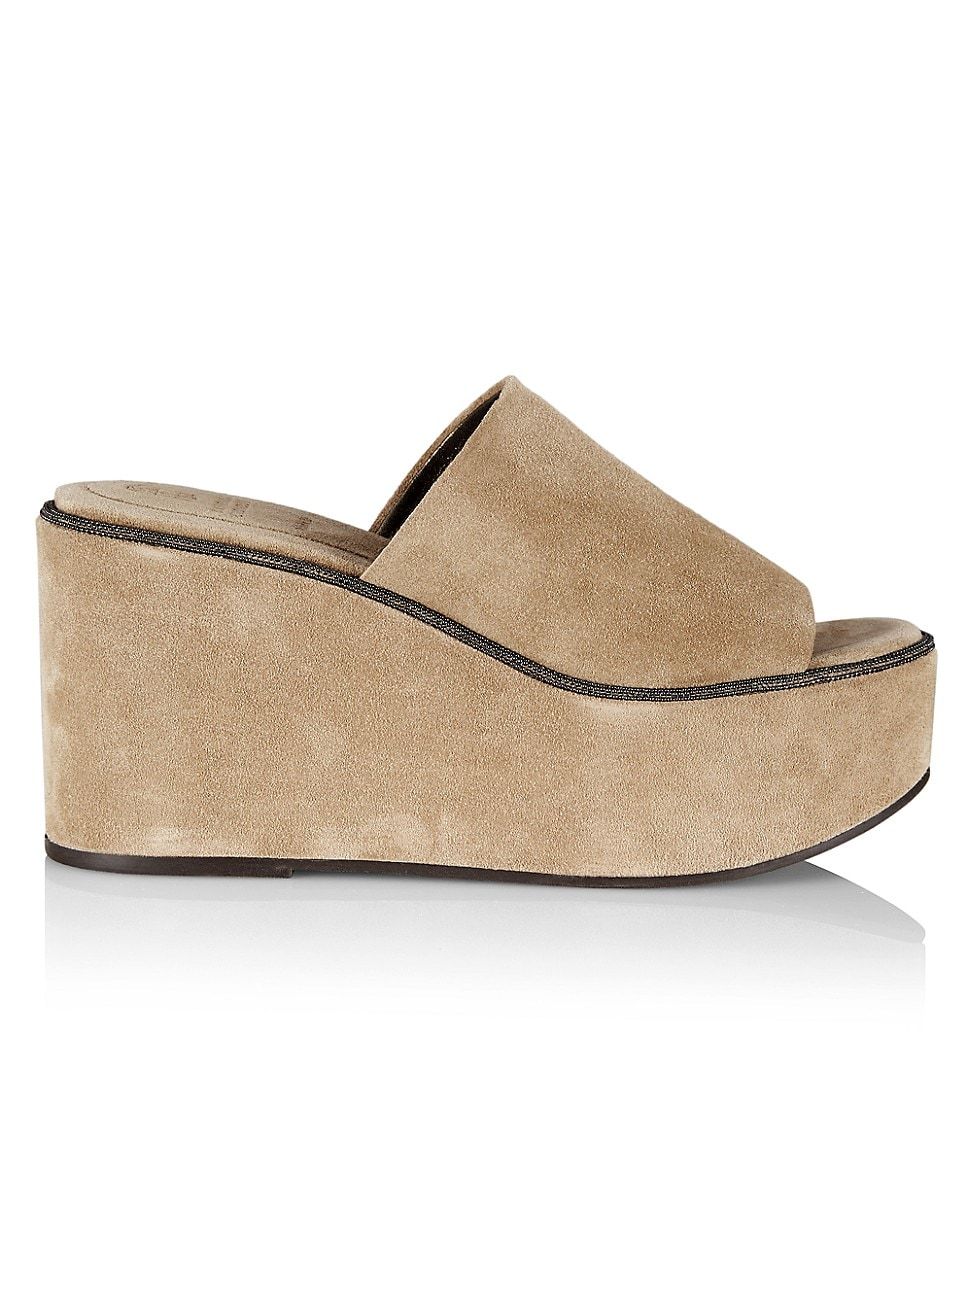 Women's Wedge Sandals | Dillard's